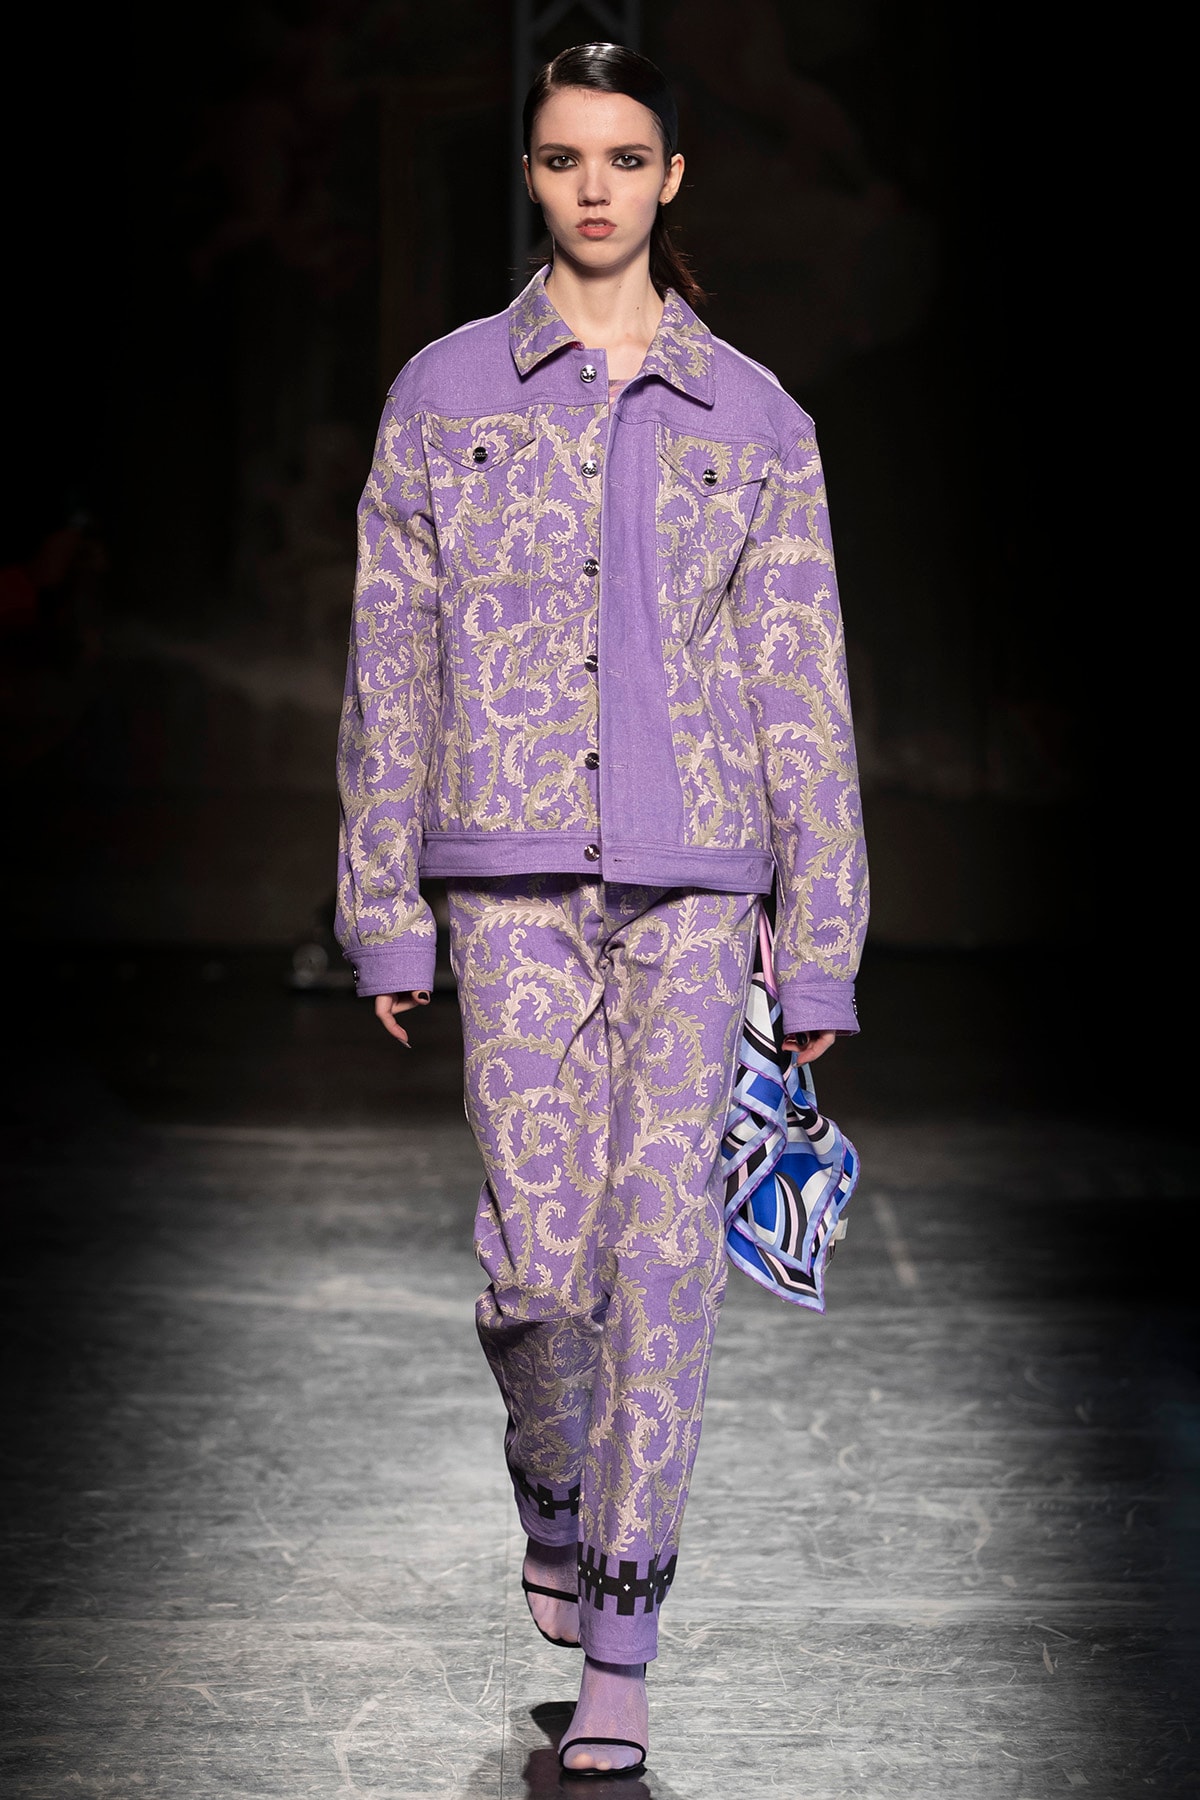 KOCHÉ x Emilio Pucci Fall/Winter 2020 Collection Runway Show Jacket Pants Purple Print